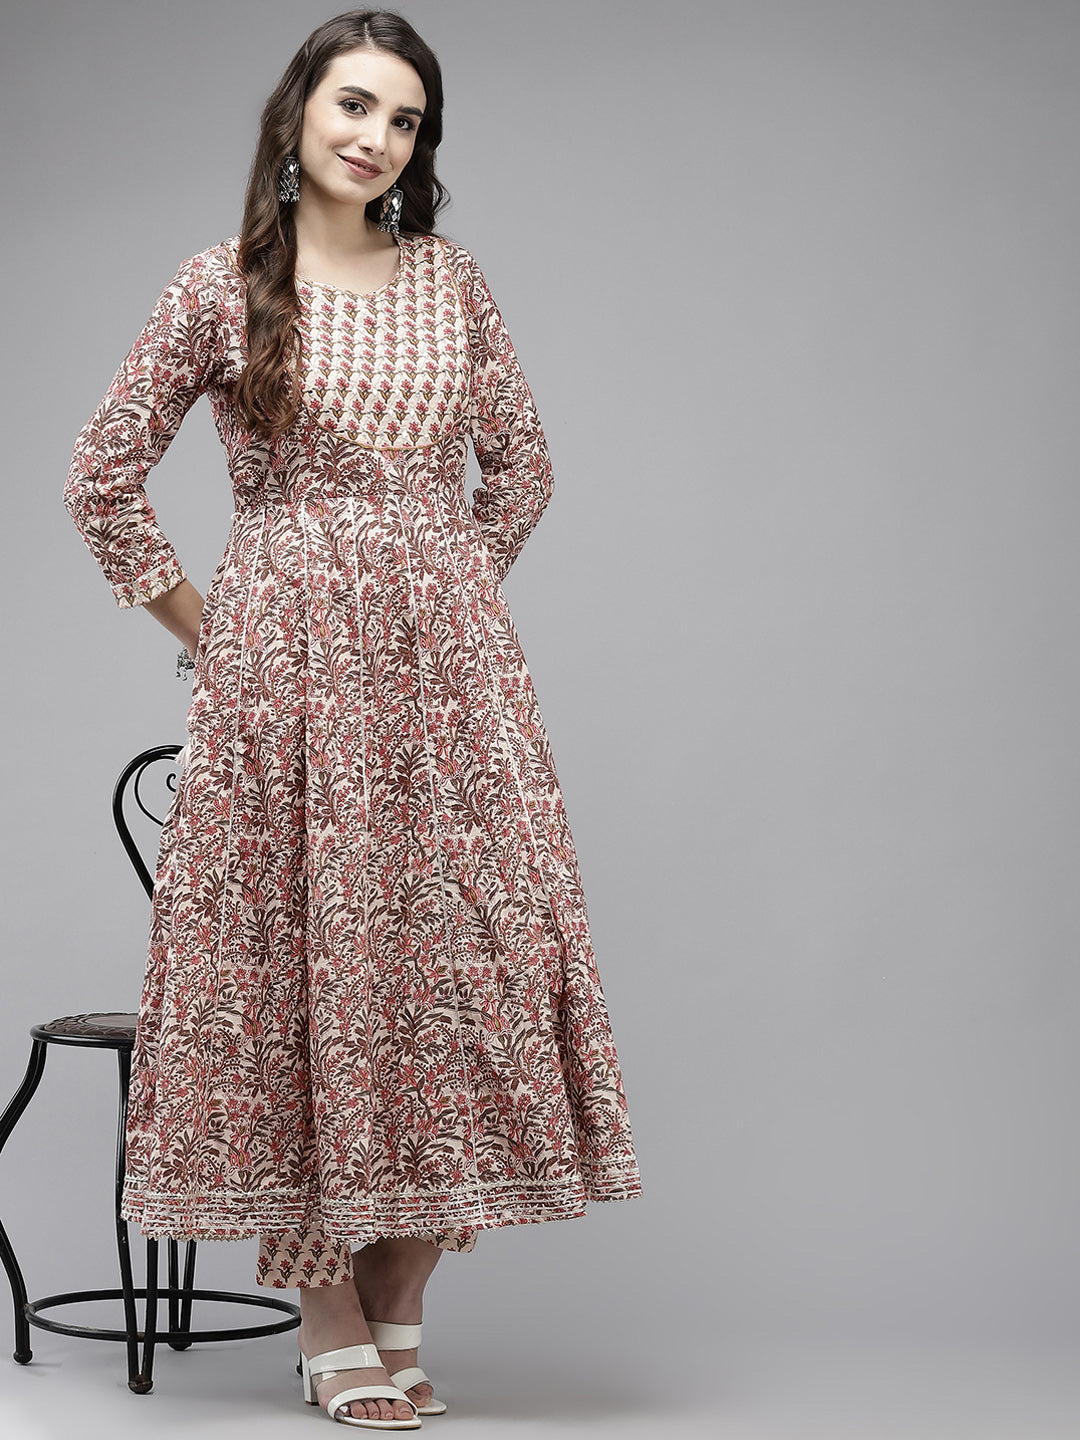 Ishin Women's Cotton Off White Embroidered Anarkali Kurta Trouser Set